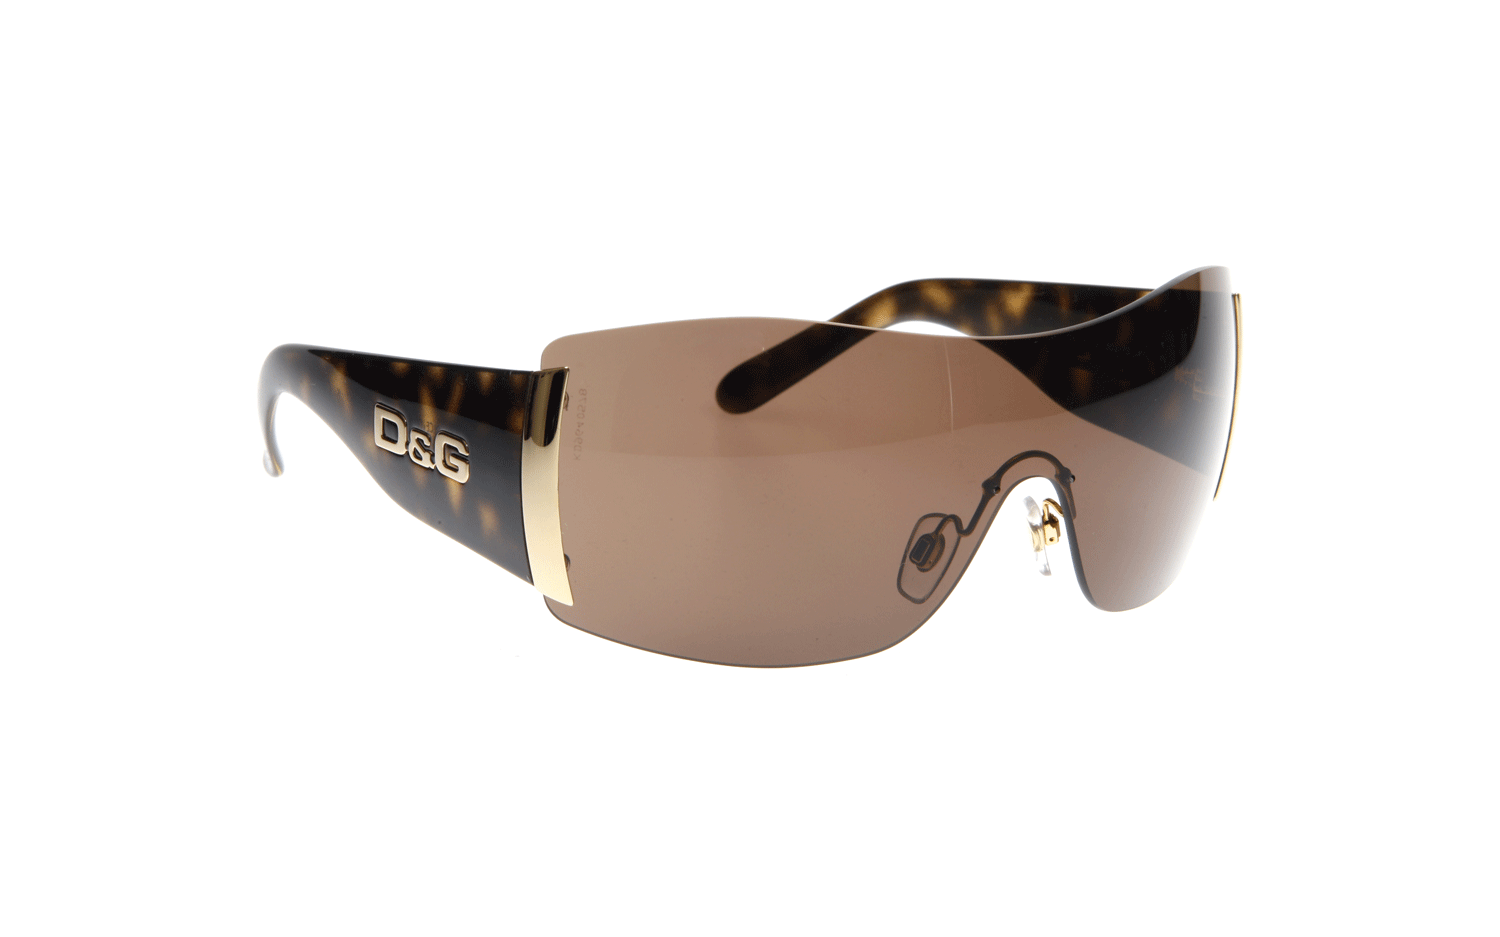 D&g 8039 Sunglasses | vlr.eng.br